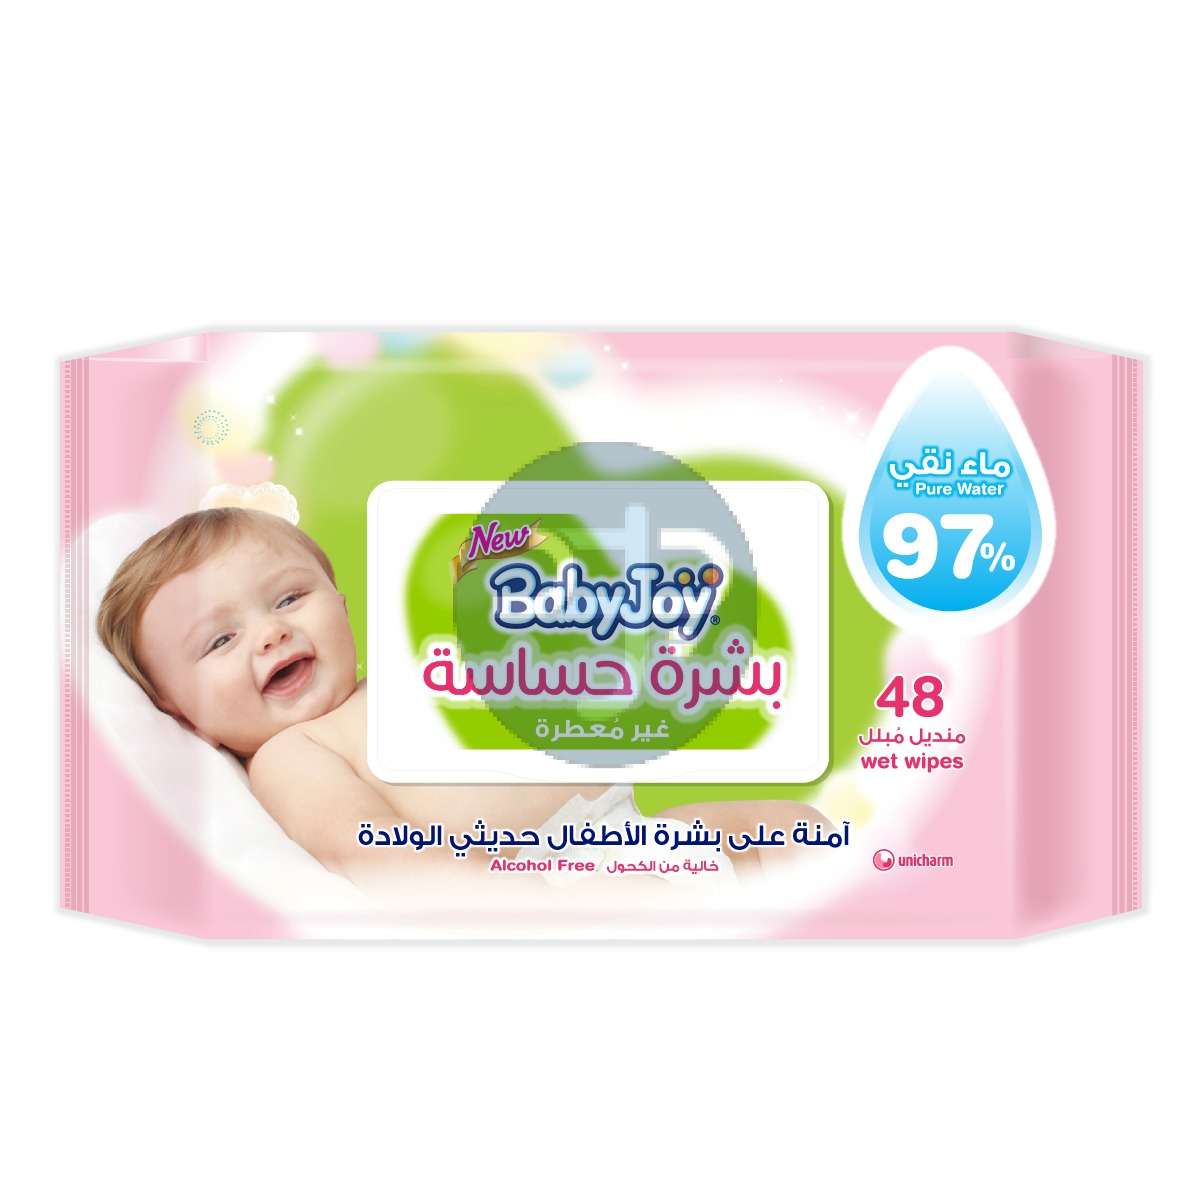 Product-بيبي جوي مناديل مبللة للبشرة الحساسة ، 97 ٪ ماء نقي ، غير معطر ، عبوة من 48 مناديل مبللة للأطفال